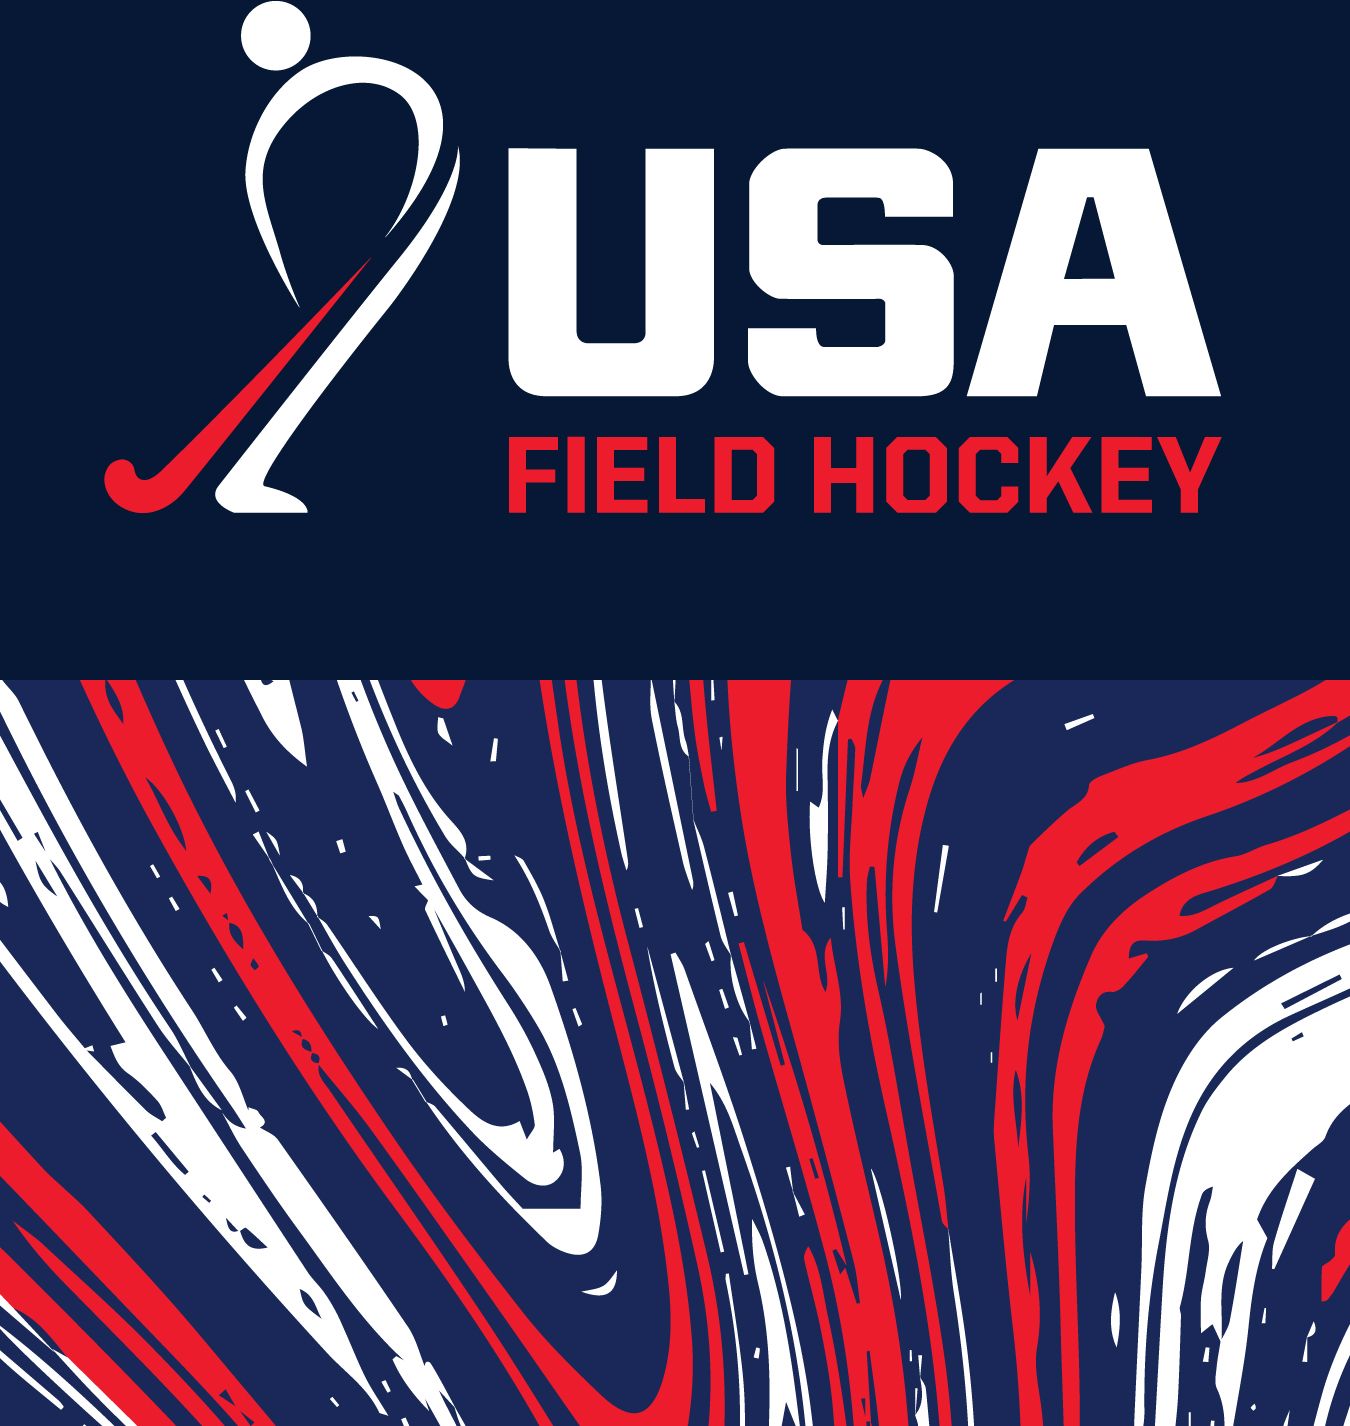 USA Field Hockey Swirls Petite Medium